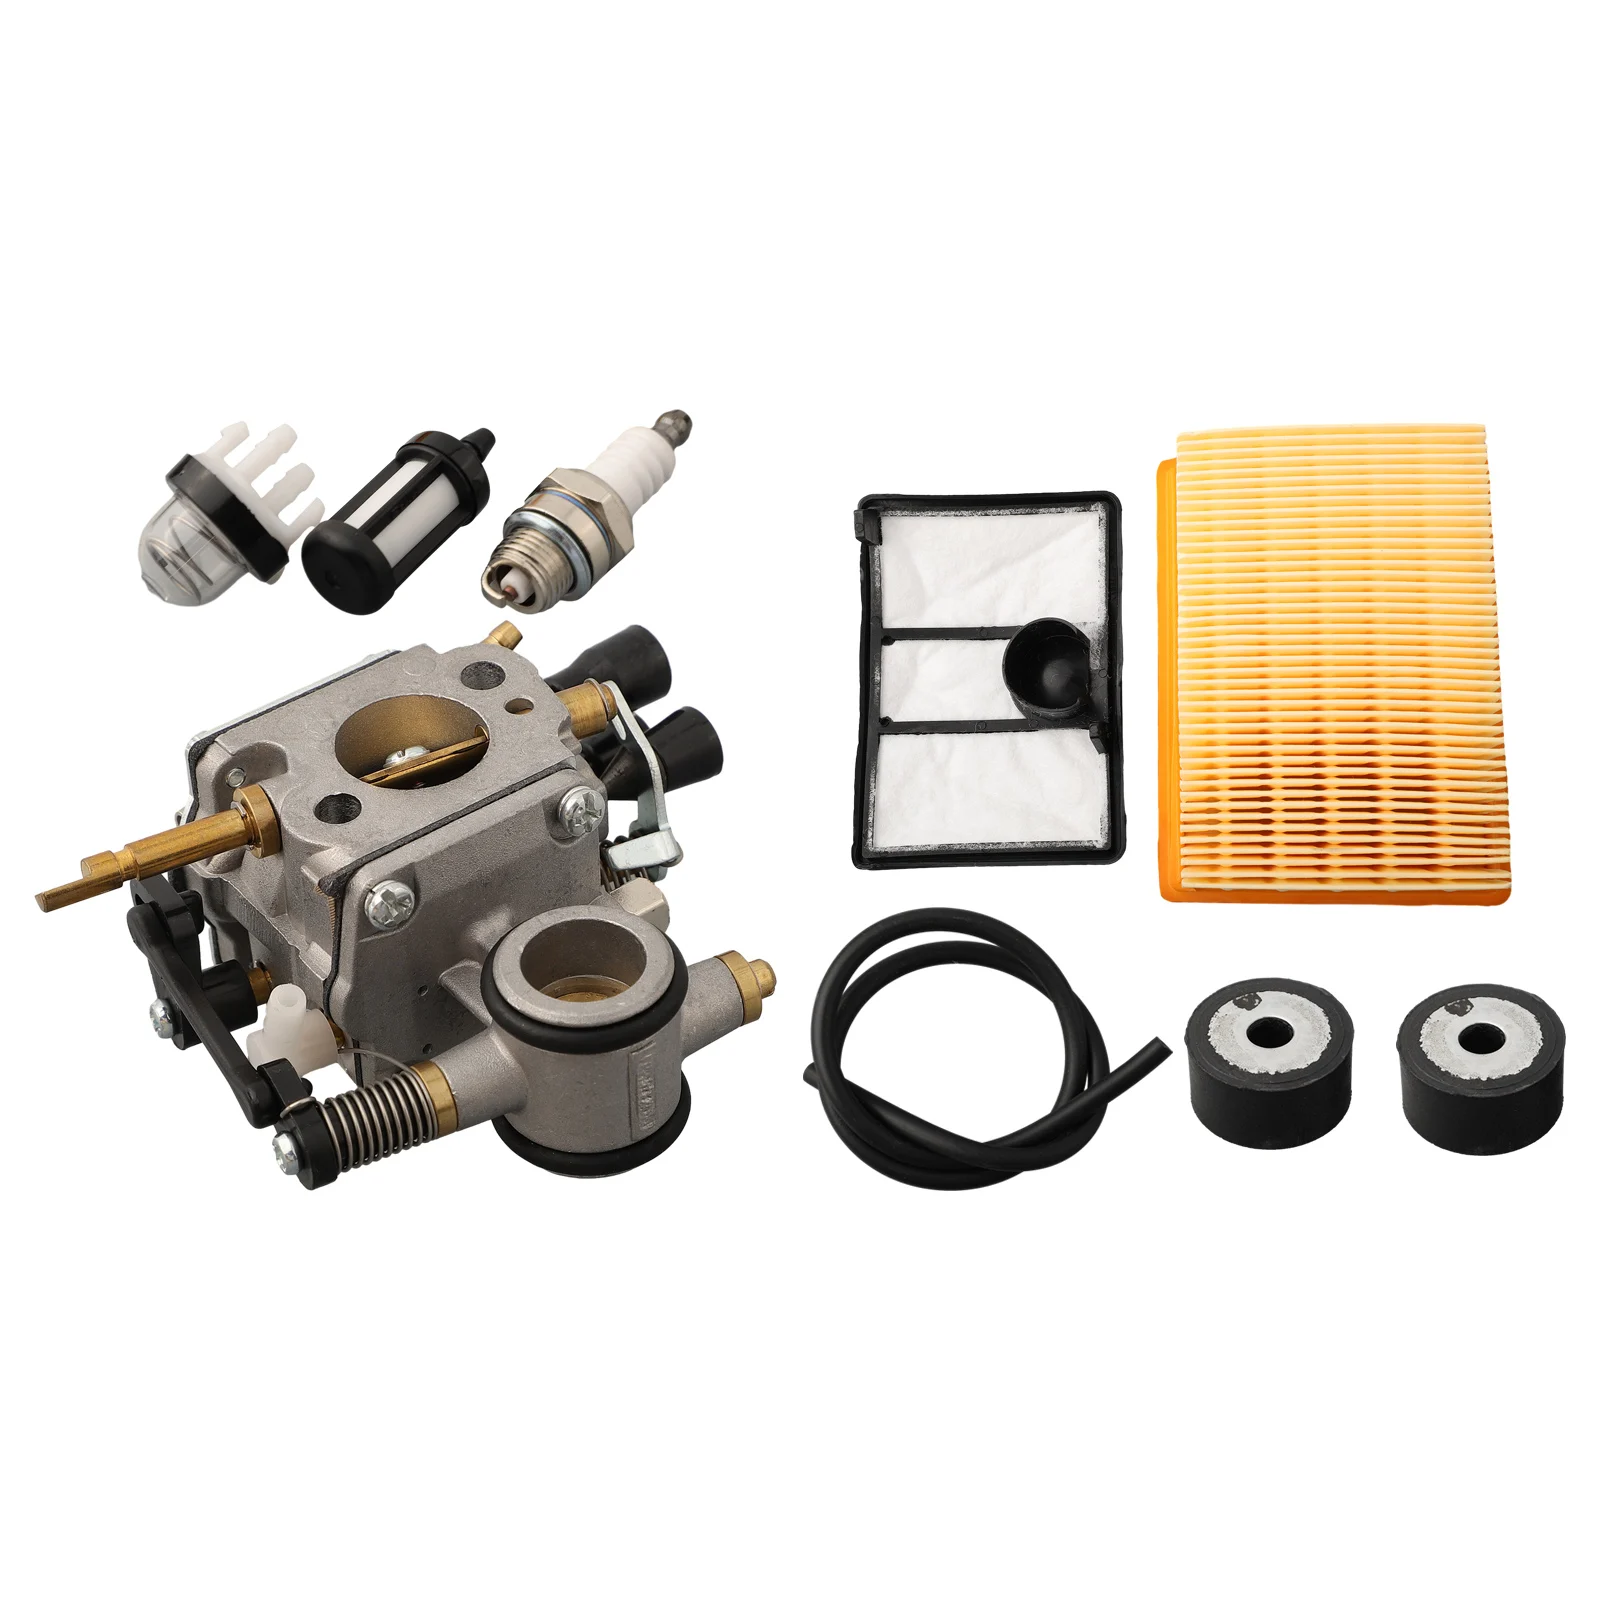 

Efficient Carburetor And Air Filter Kit For Stihl TS700 TS800 Cut Off Saws 4224-120-0651 Carburetor Air Filter Garden Power Tool